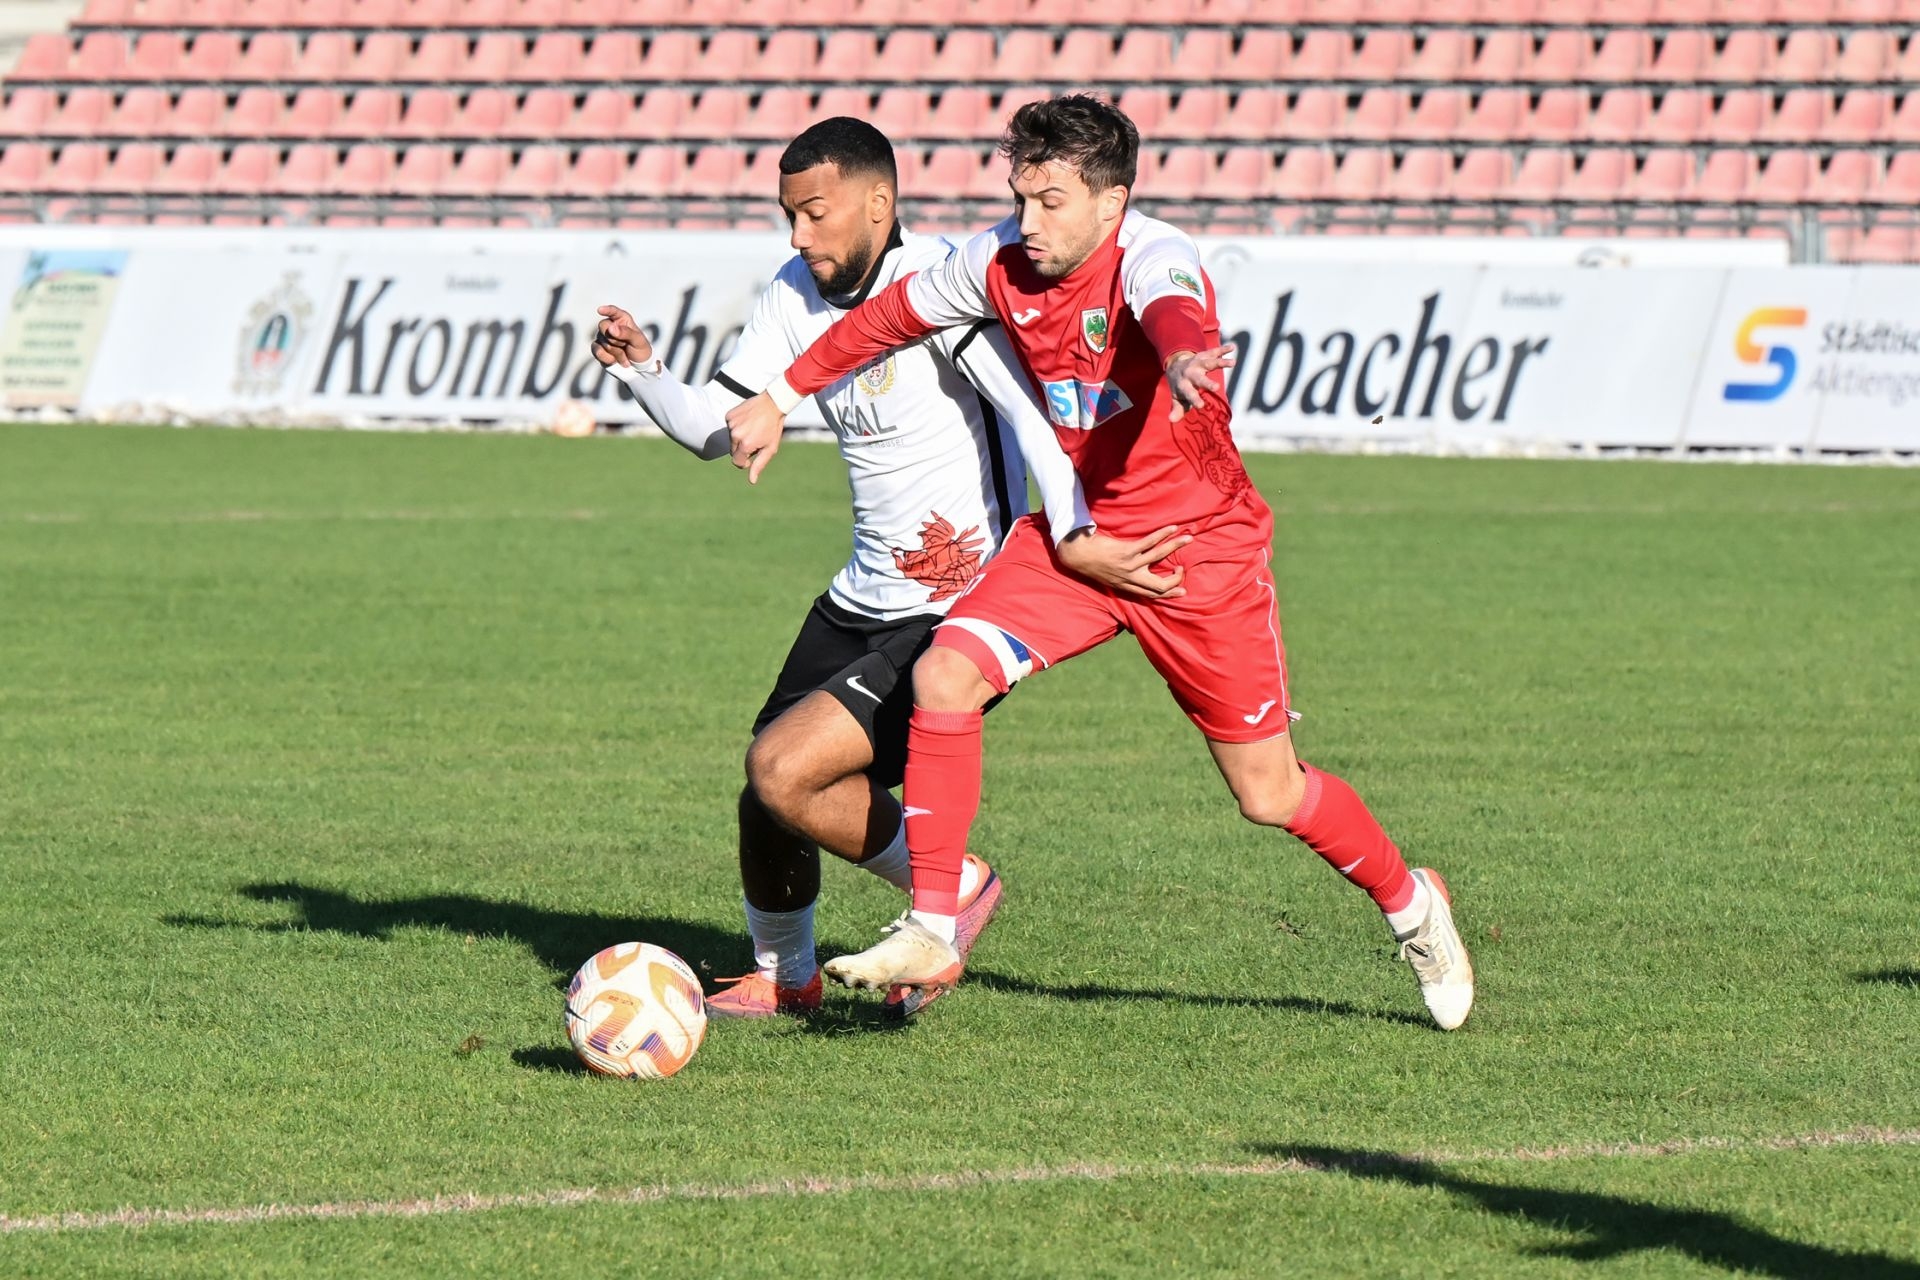 Saison 2022/23, Spieltag 2, KSV Hessen Kassel, Wormatia Worms, Endstand 1:1: Jones